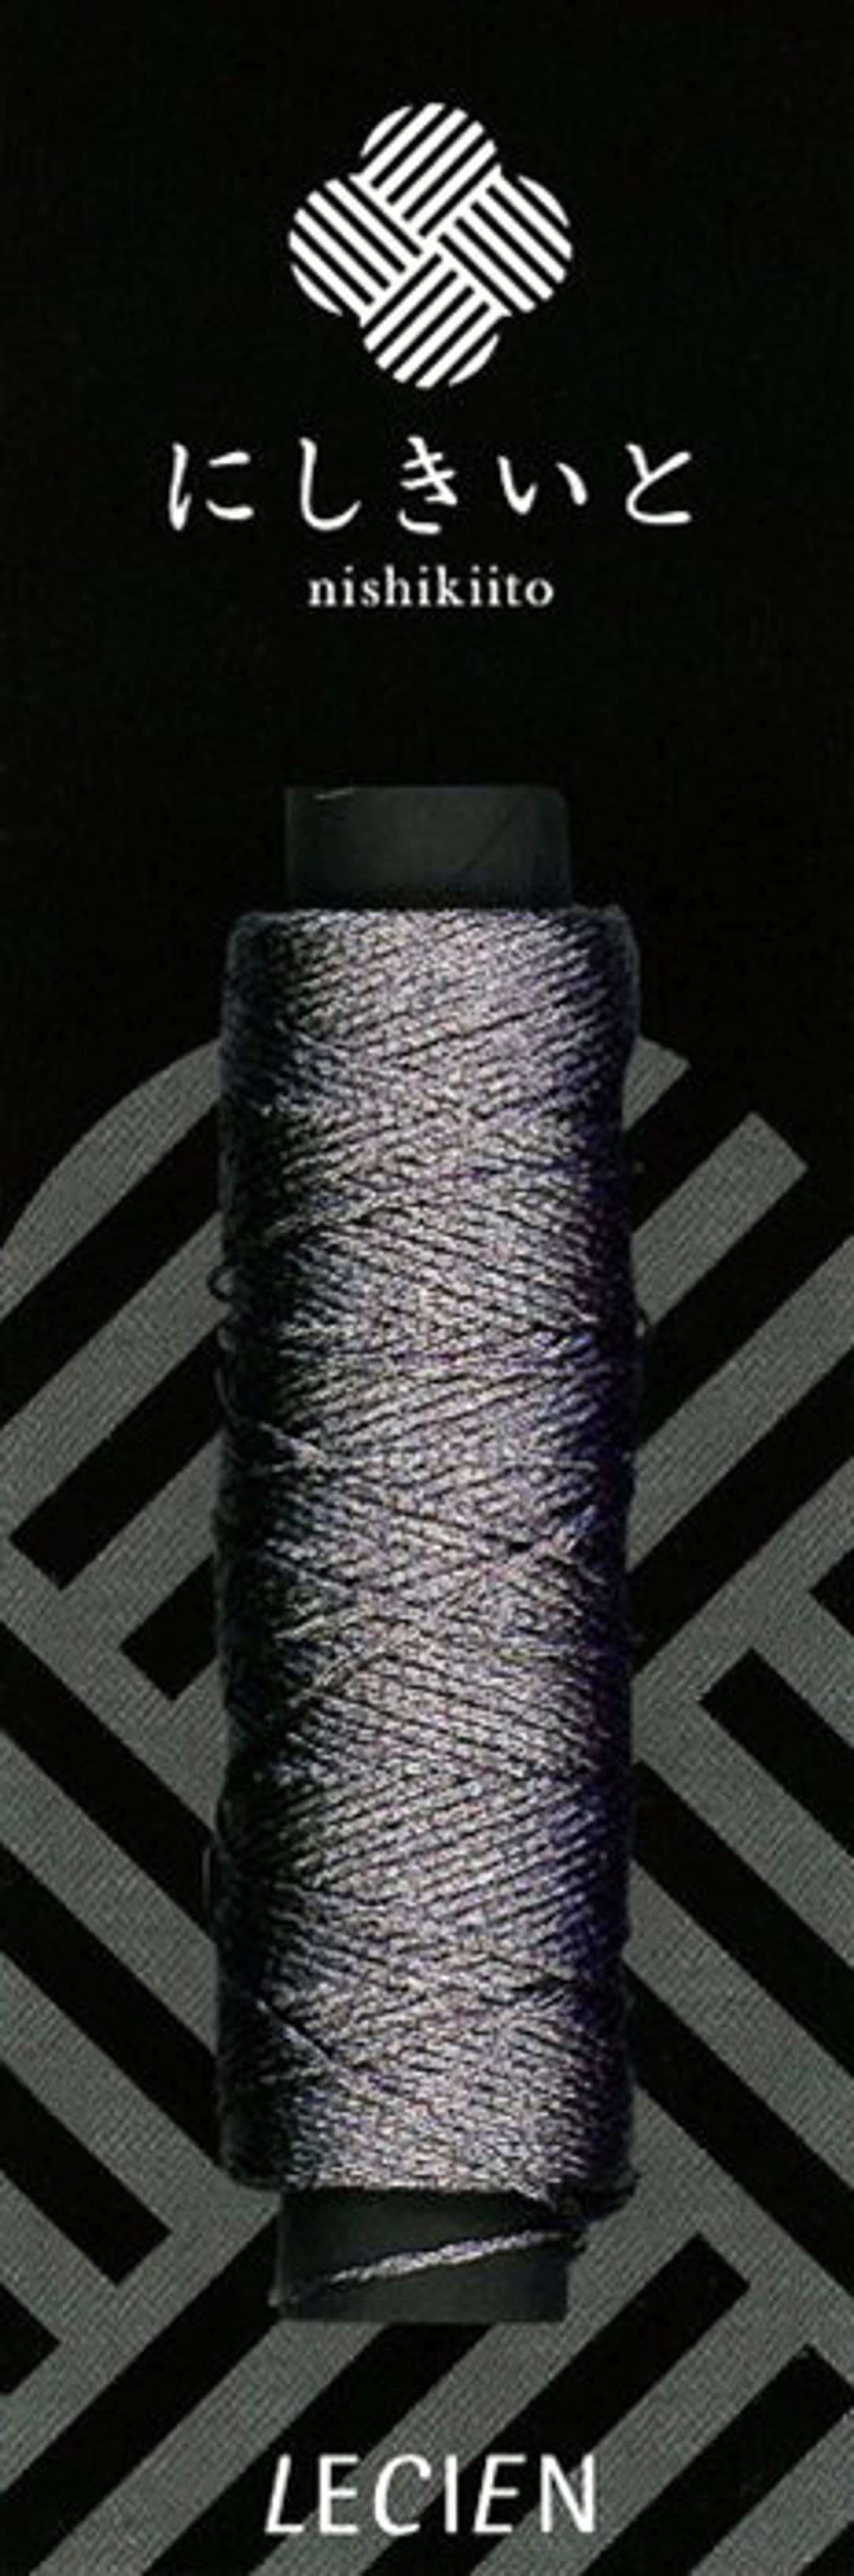 Lecien Nishikiito Metallic Embroidery Floss - 23